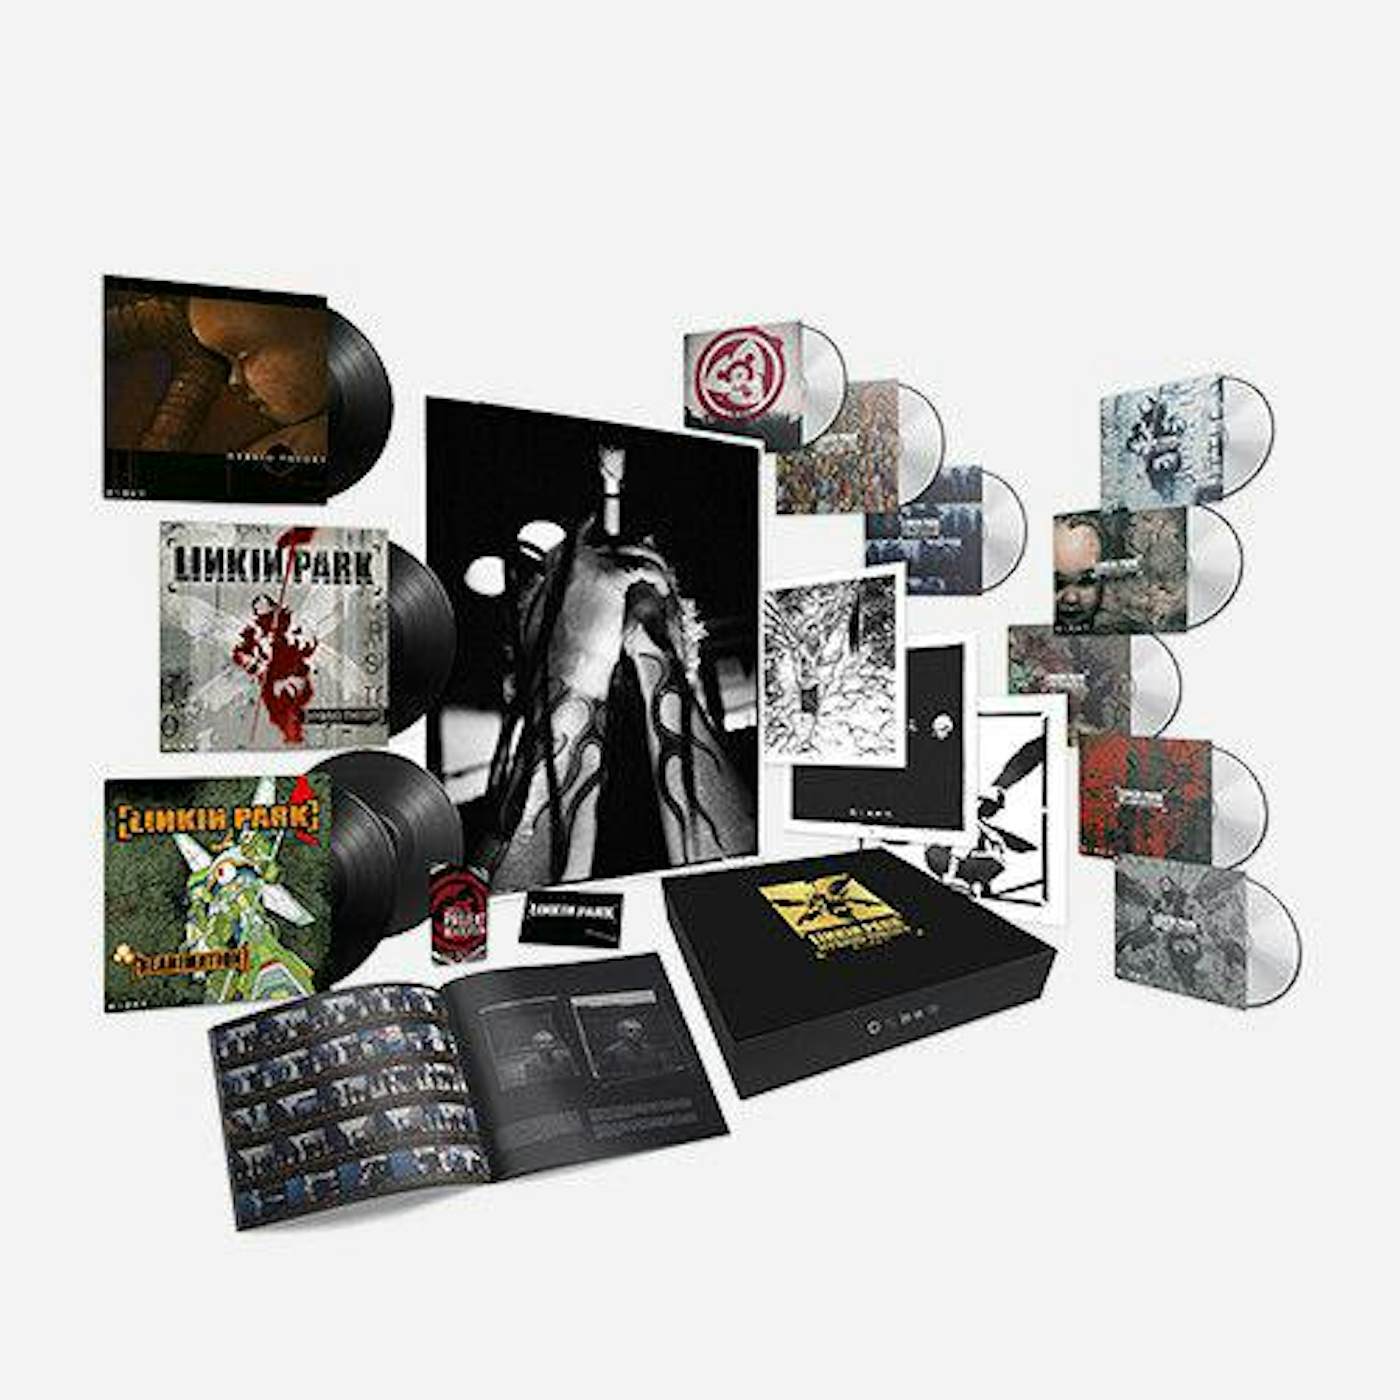 Linkin Park Hybrid Theory (20th Anniversary Edition/Super Deluxe/Box Set)  Vinyl Record